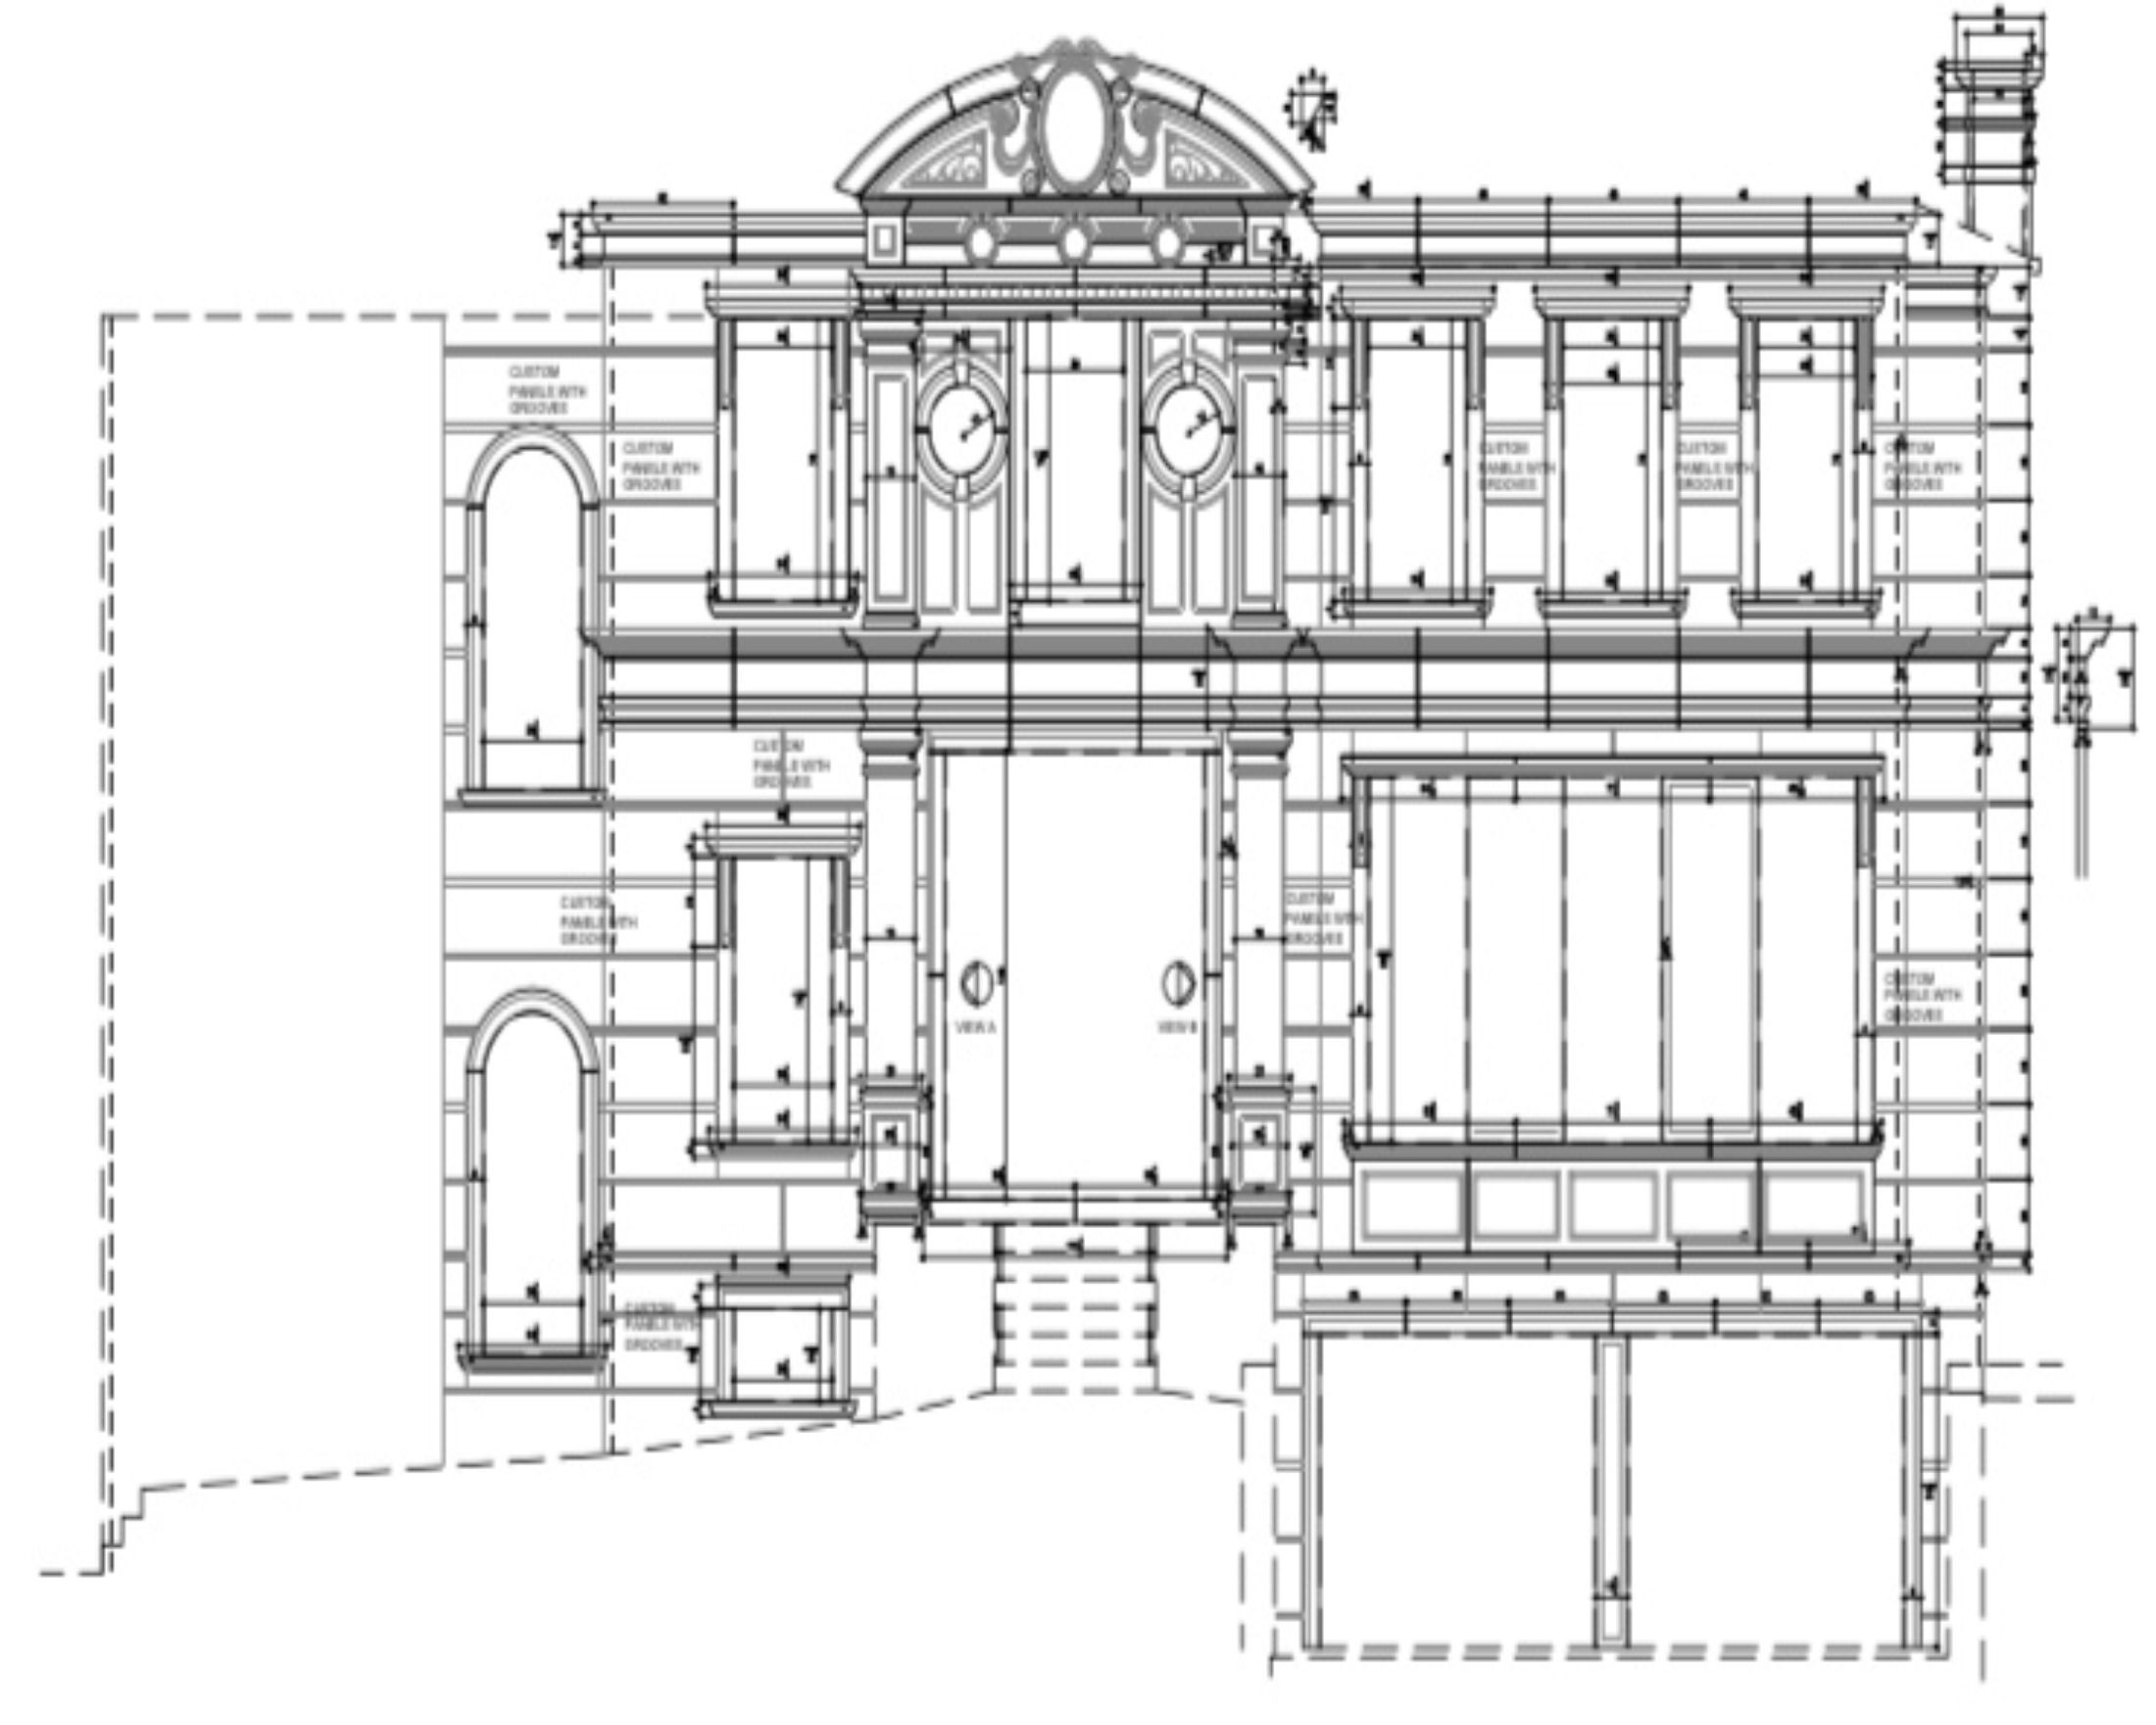 5d - 10 Hillavon - blueprint - adjusted size